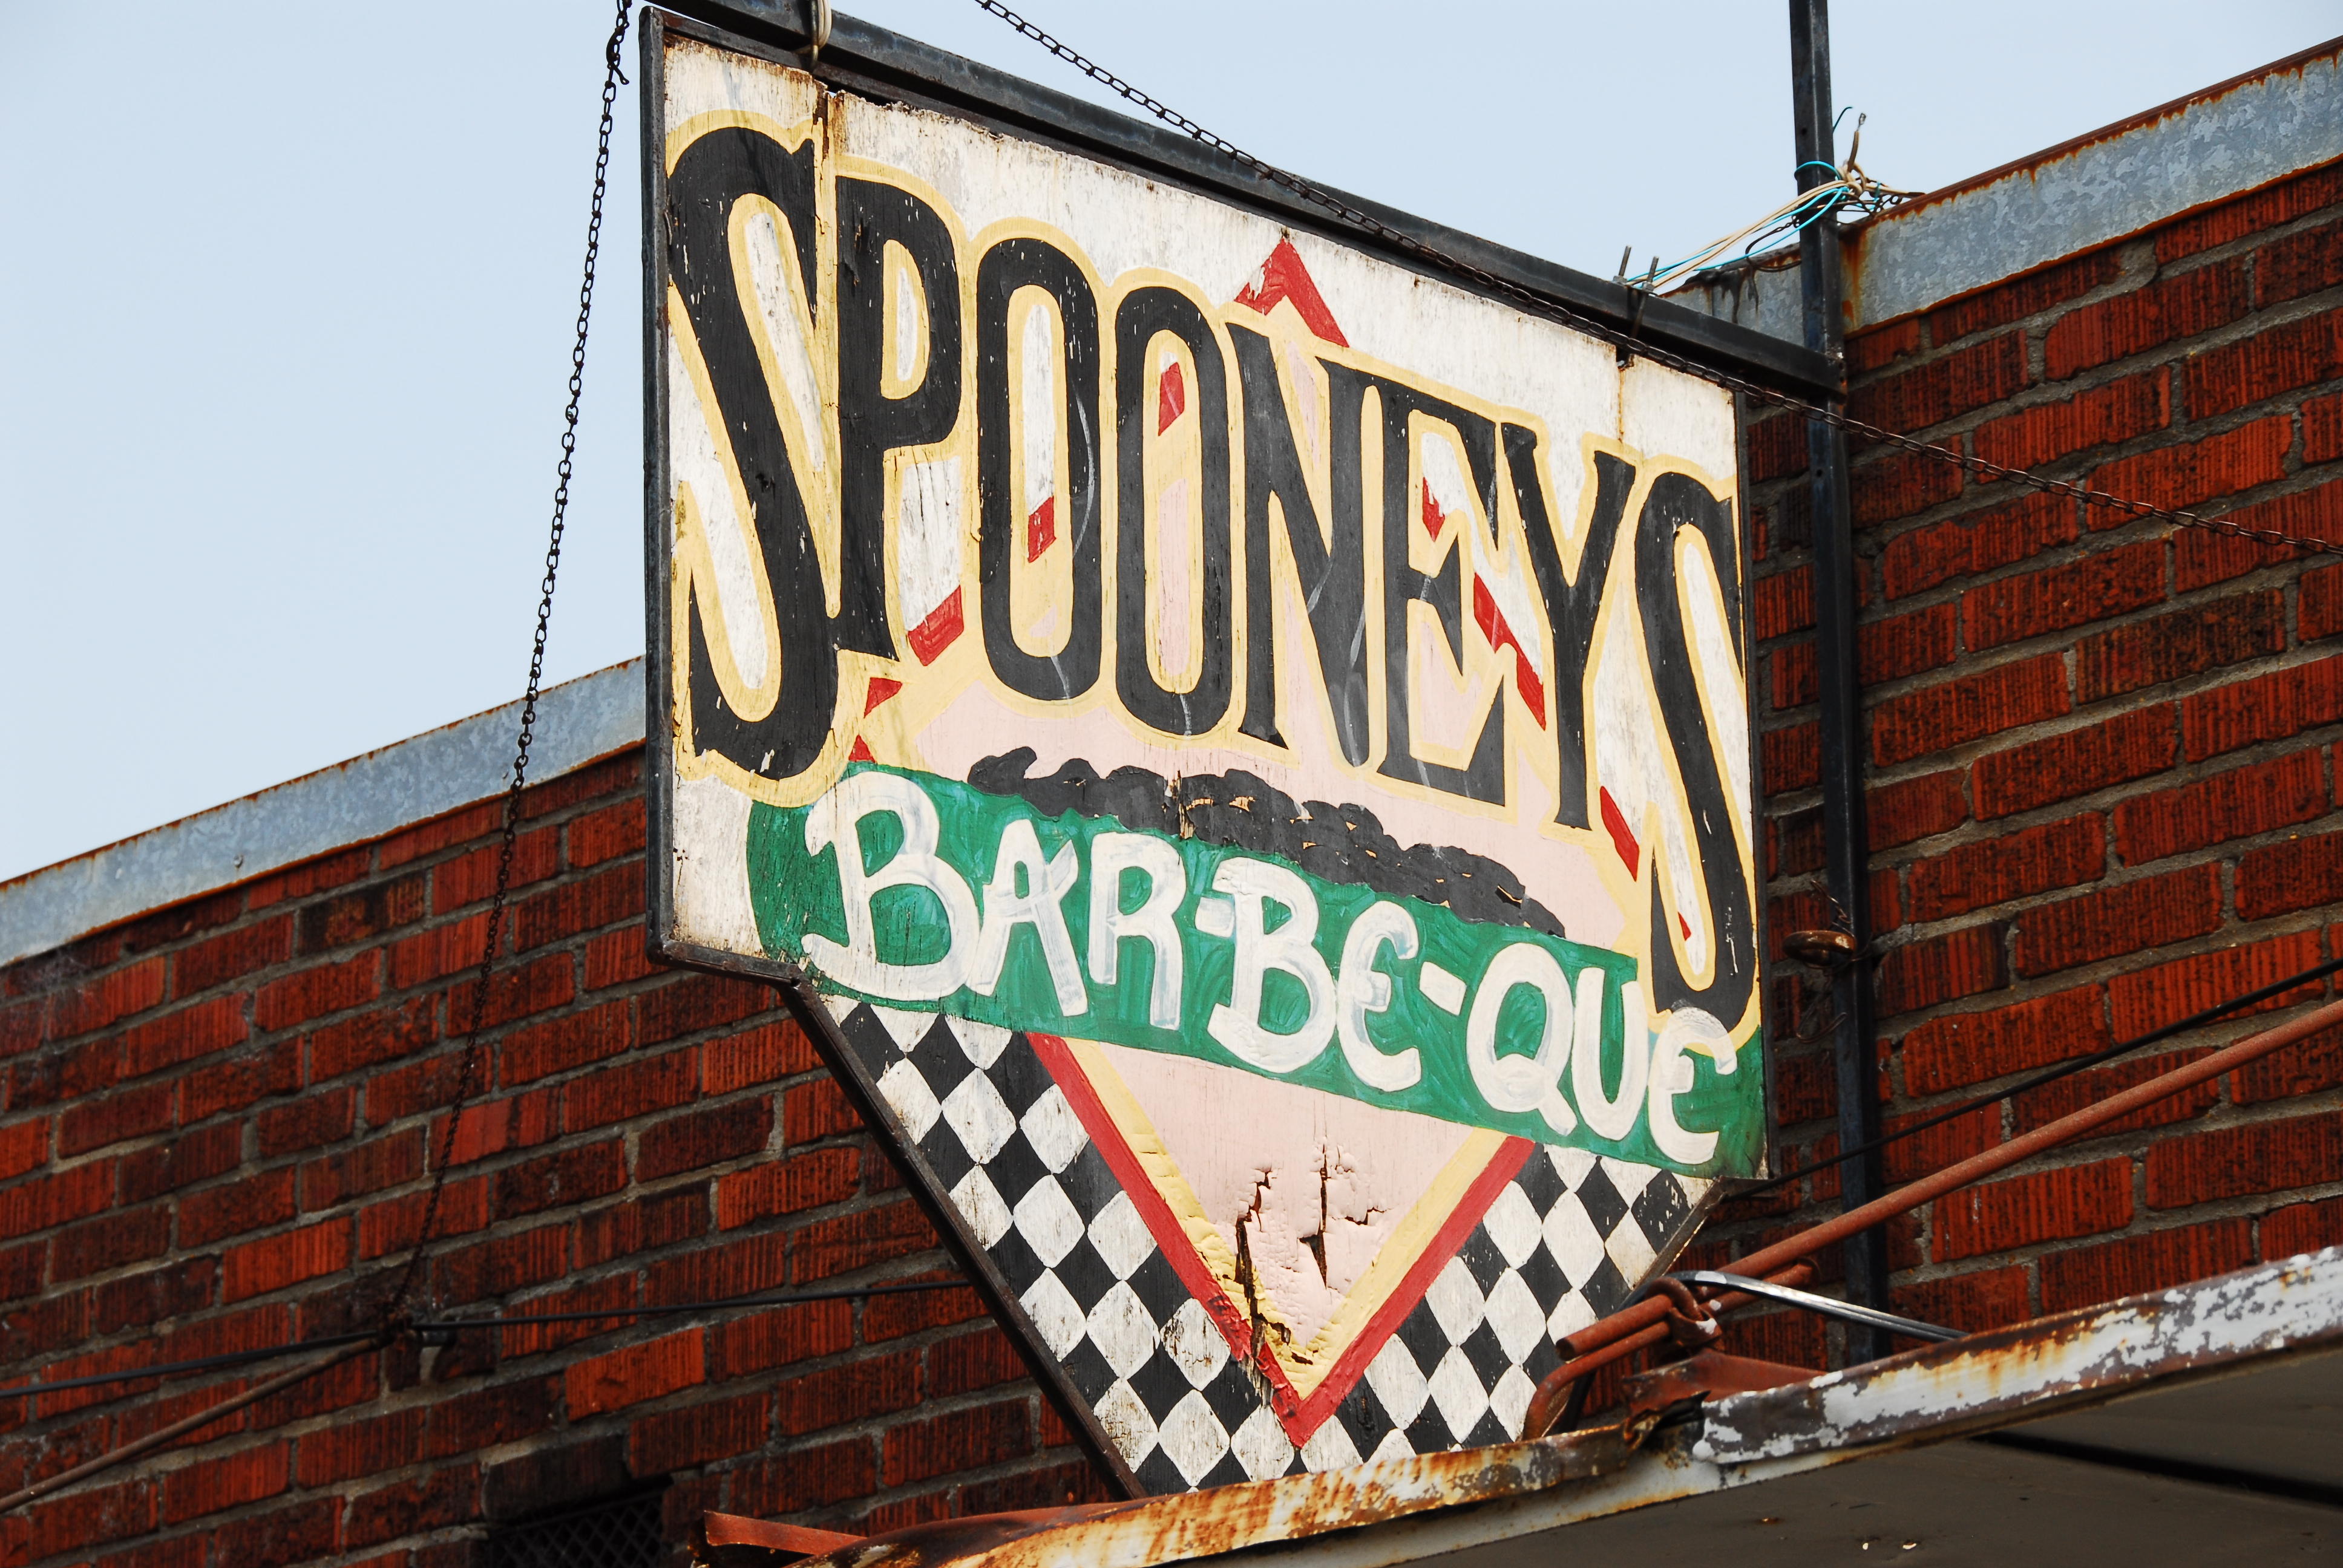 Greenwood-Spooneys Sign